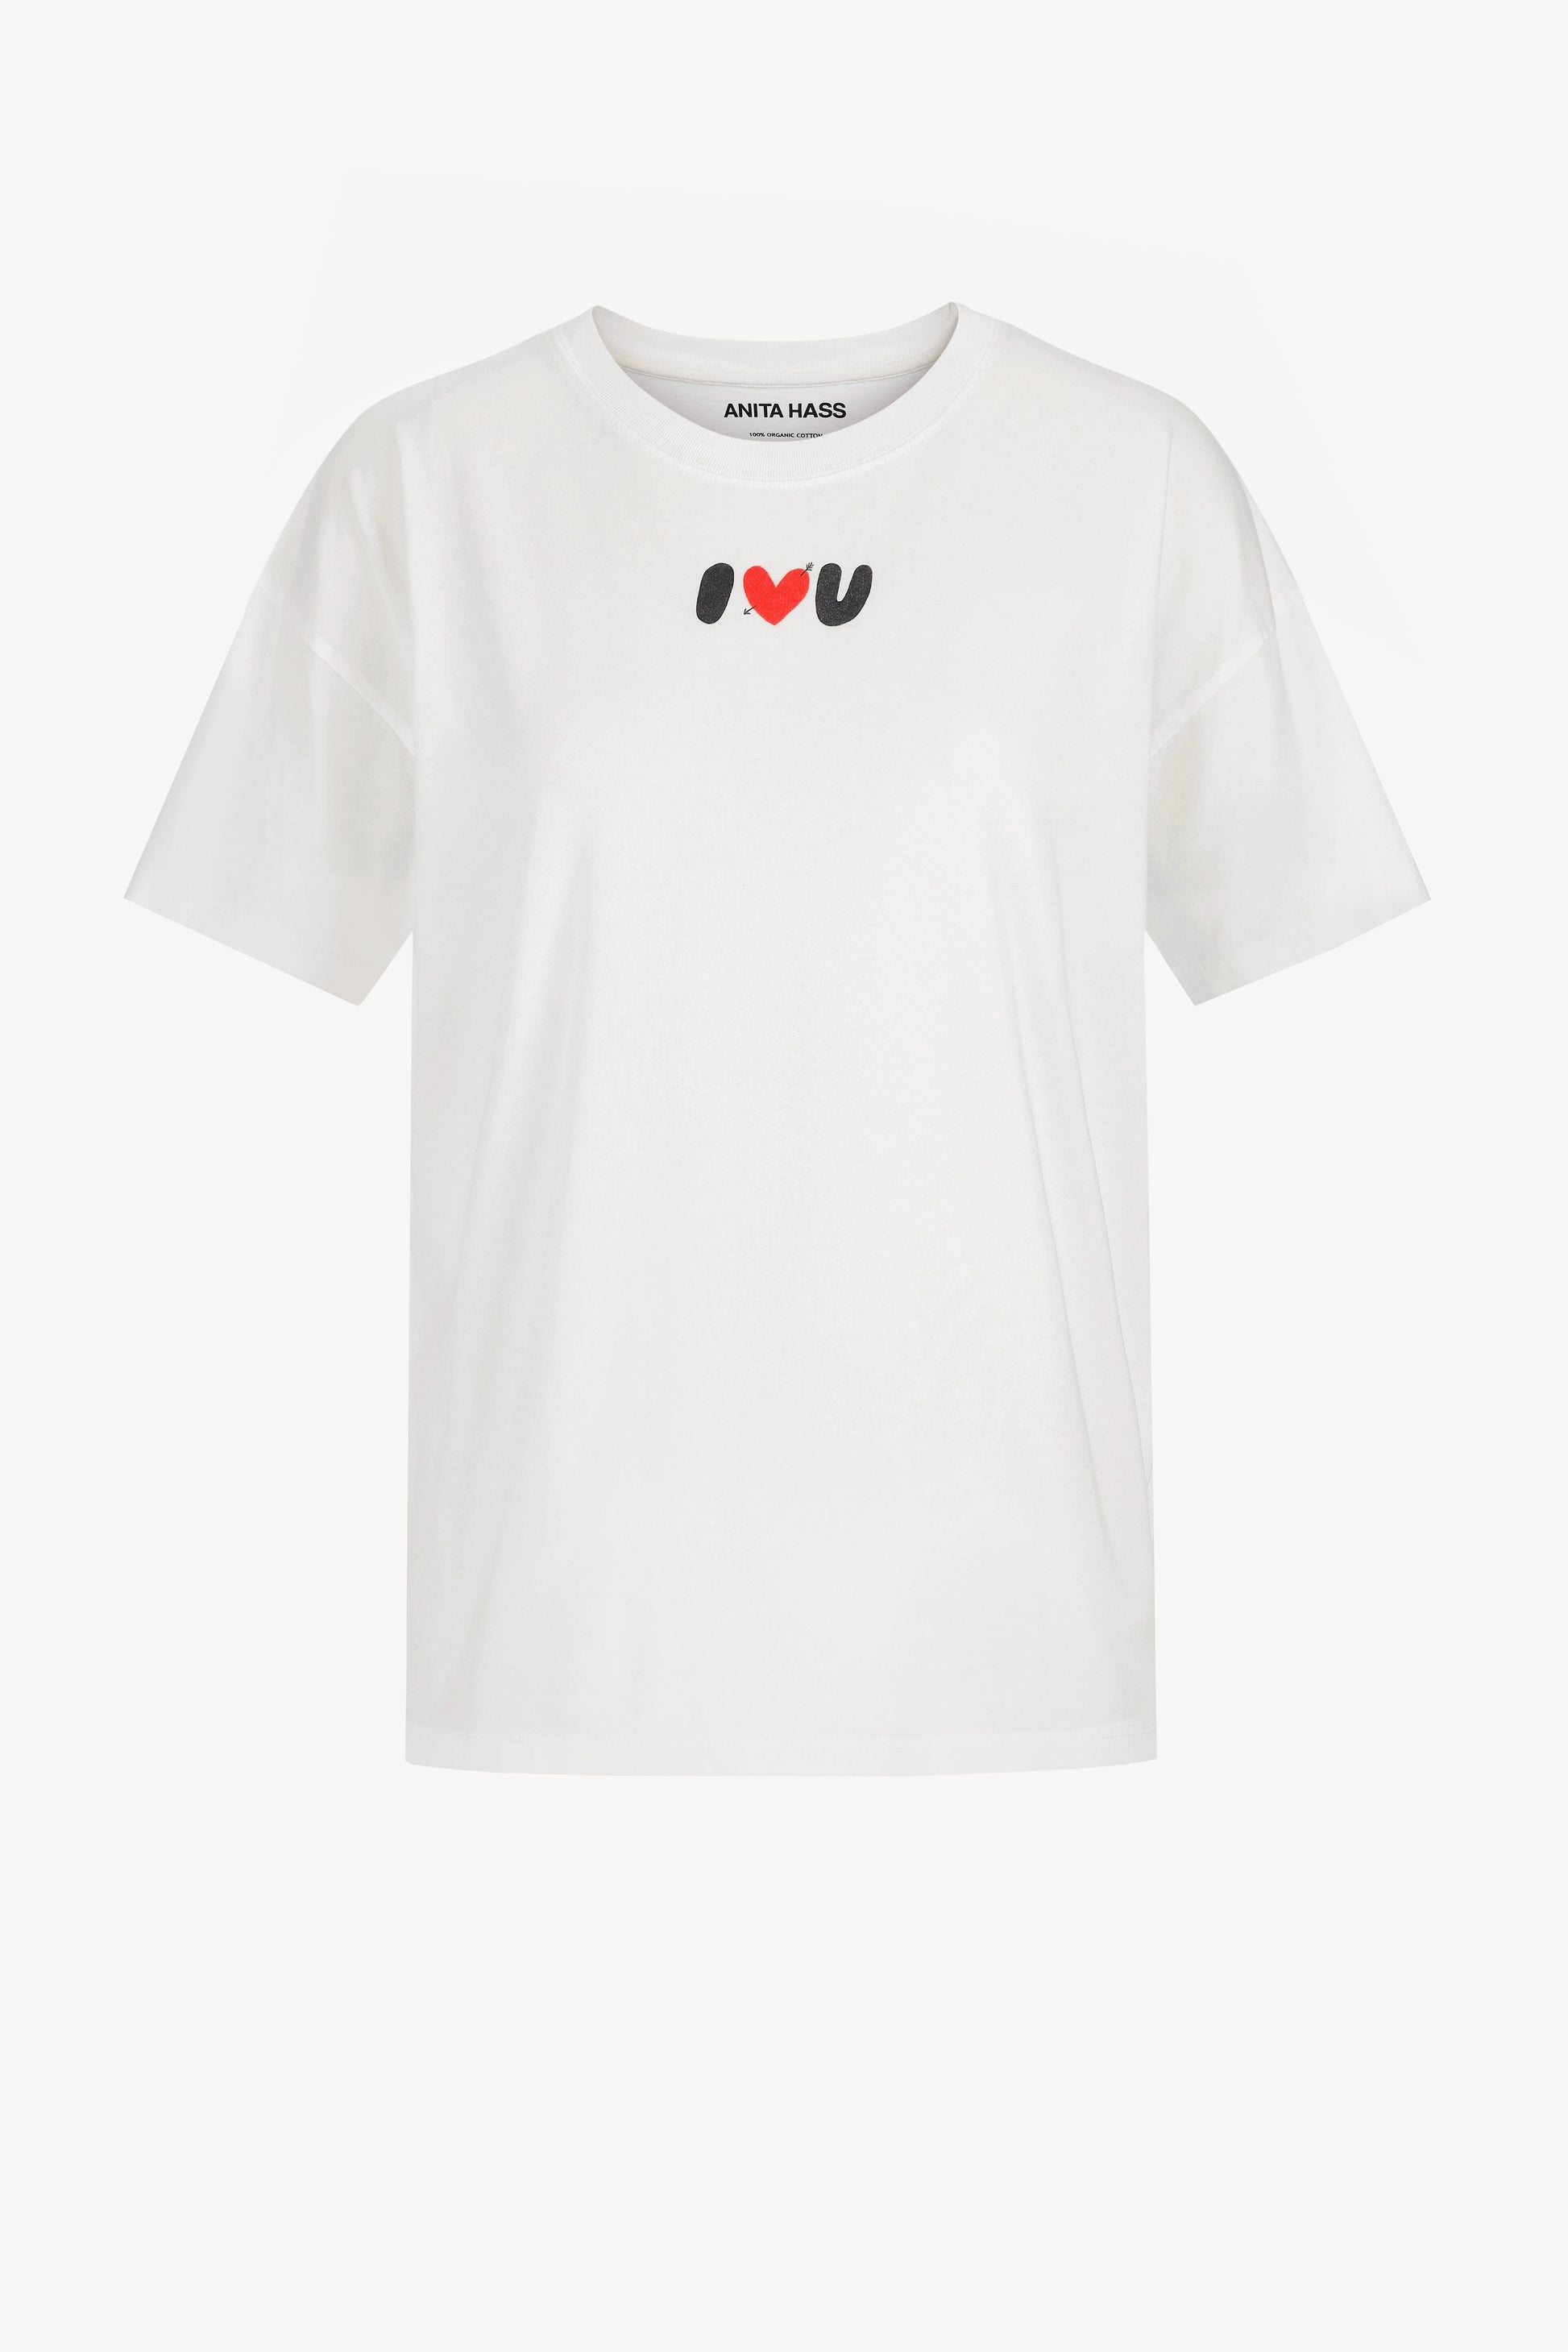 T-Shirt 'I LOVE U' in WeißAnita Hass - Anita Hass